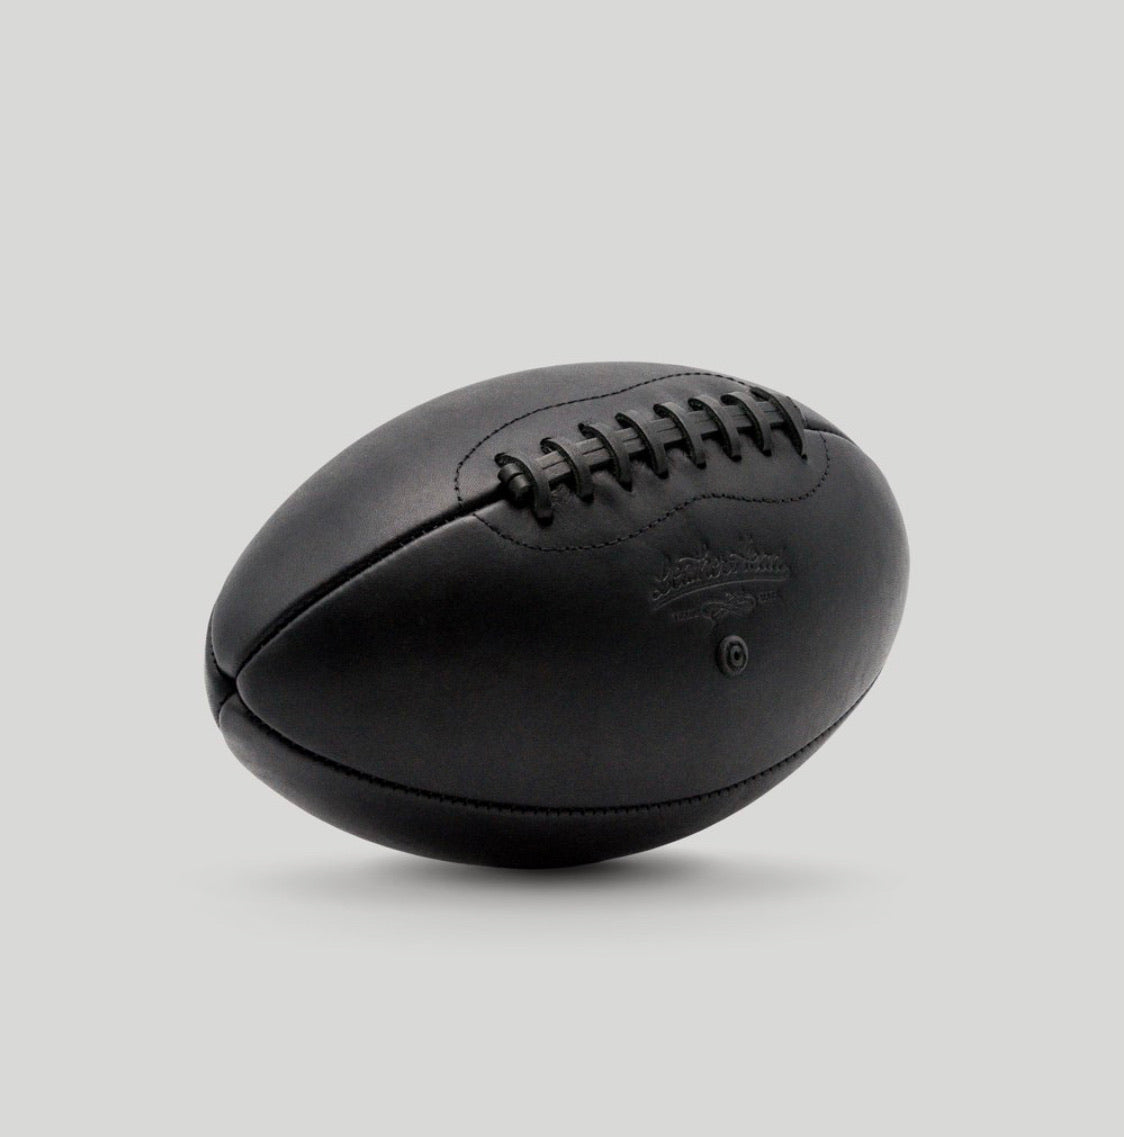 Black Onyx Football by Leather Head Sports